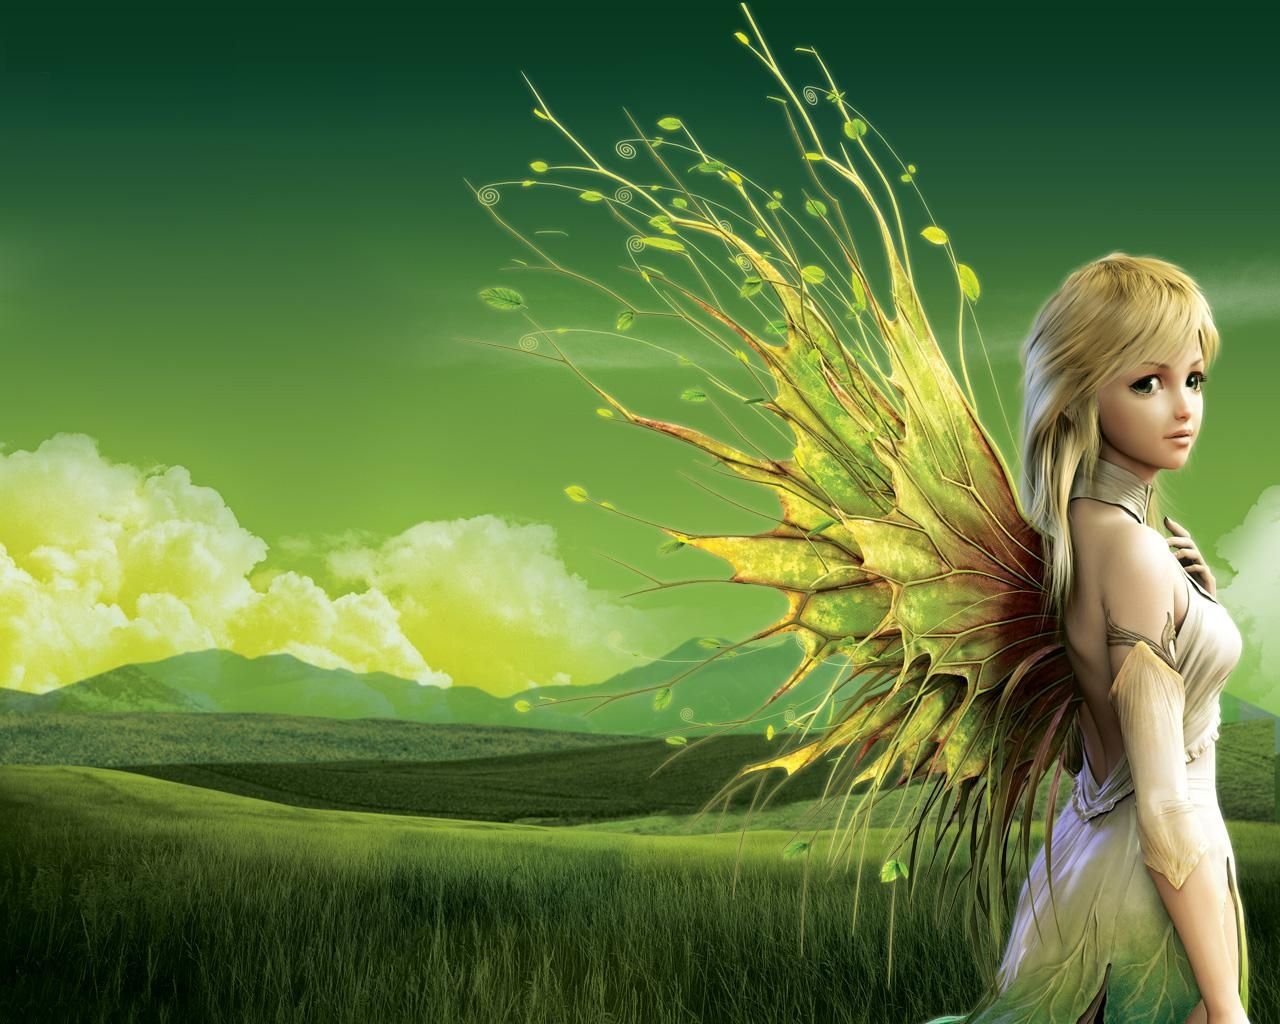 Wallpapers Fairies Fantasy Image Download